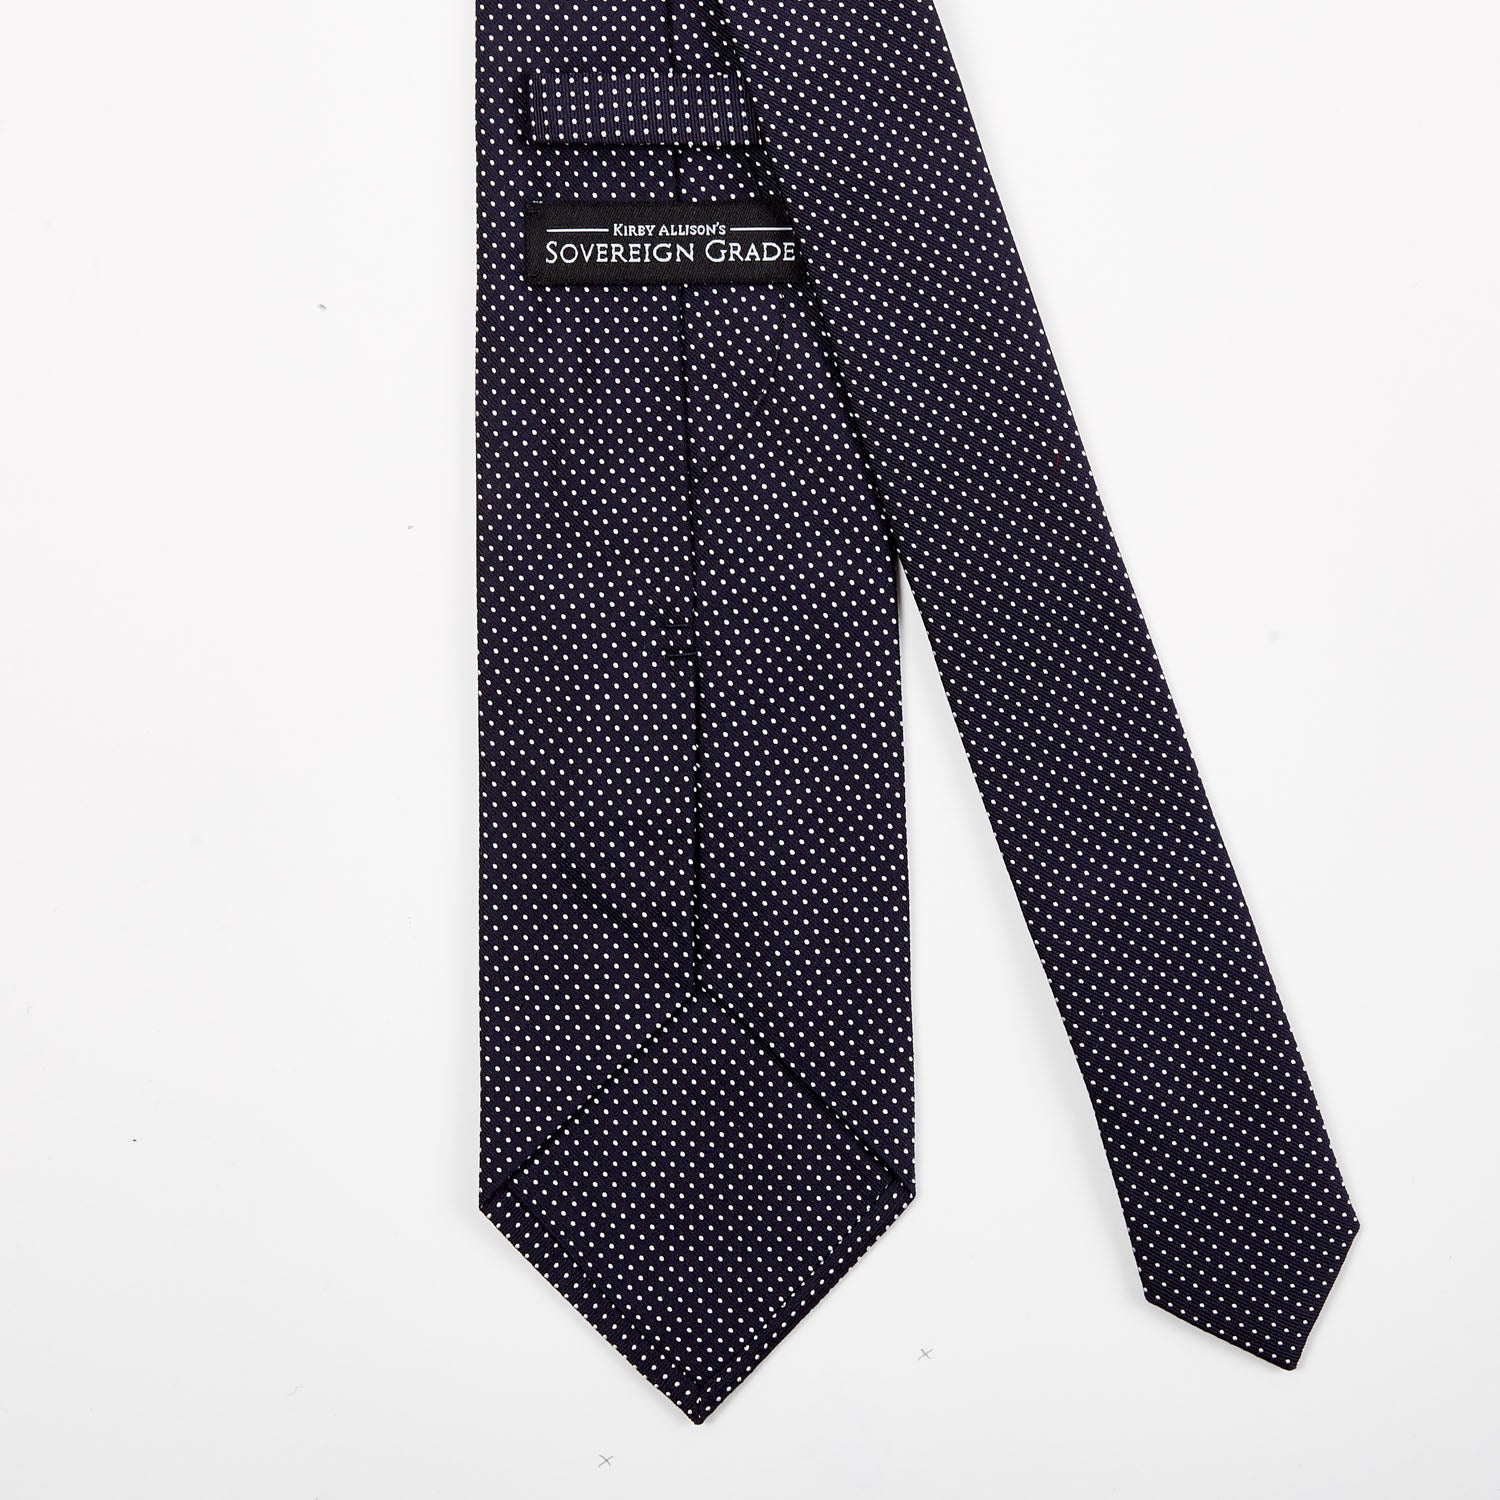 A Sovereign Grade Navy Silk Micro Dot Tie from KirbyAllison.com with handmade quality.